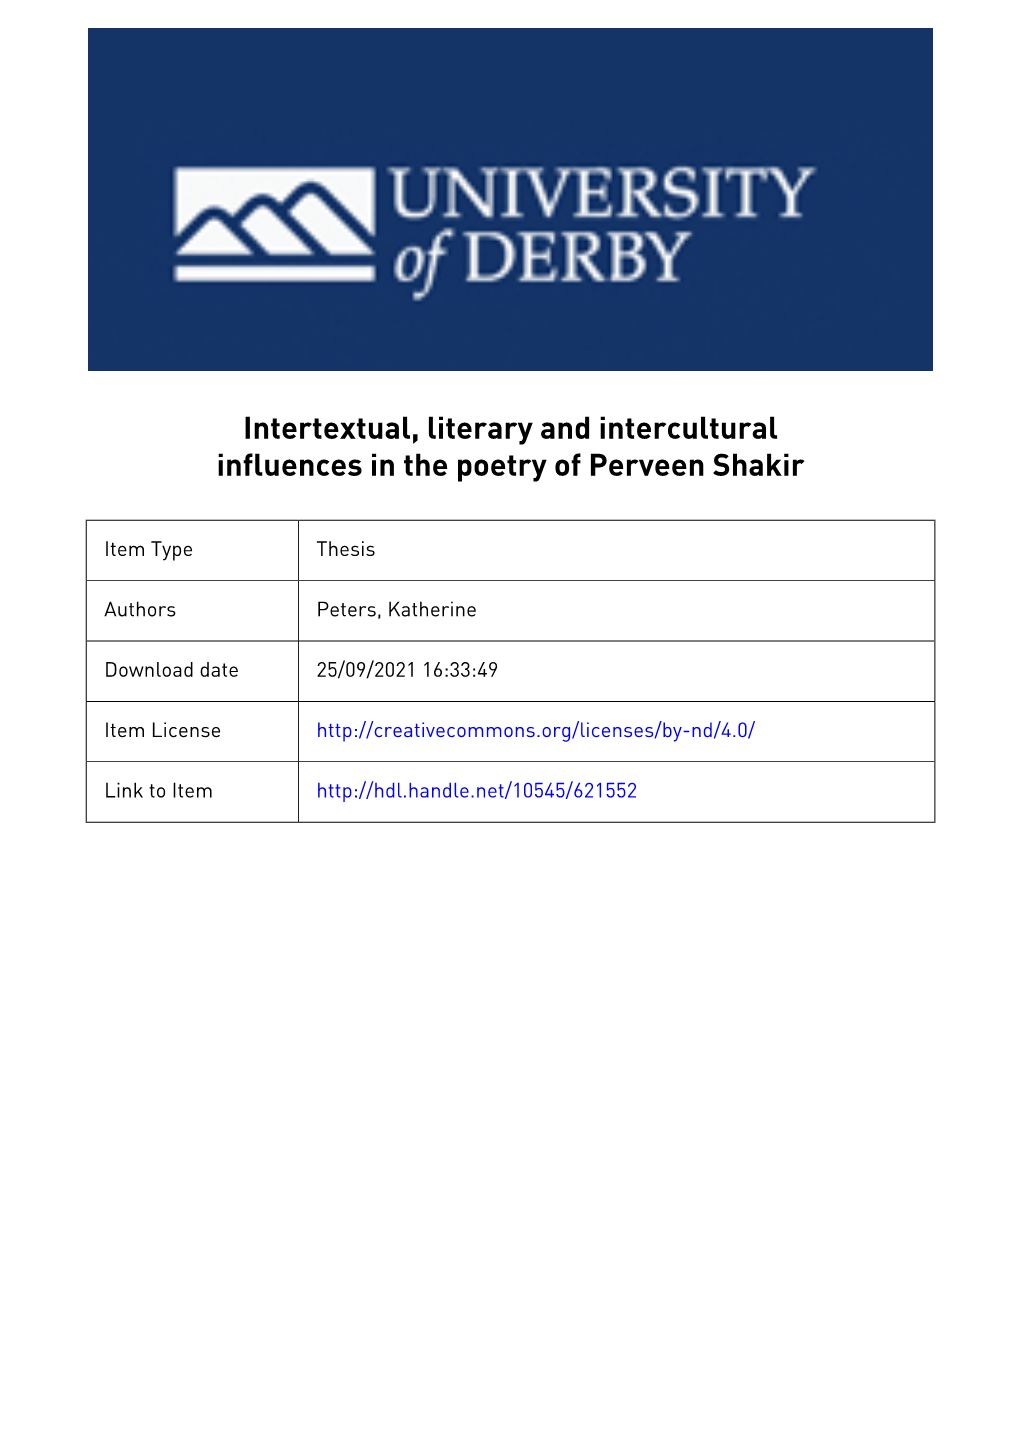 University of Derby Intertextual, Literary